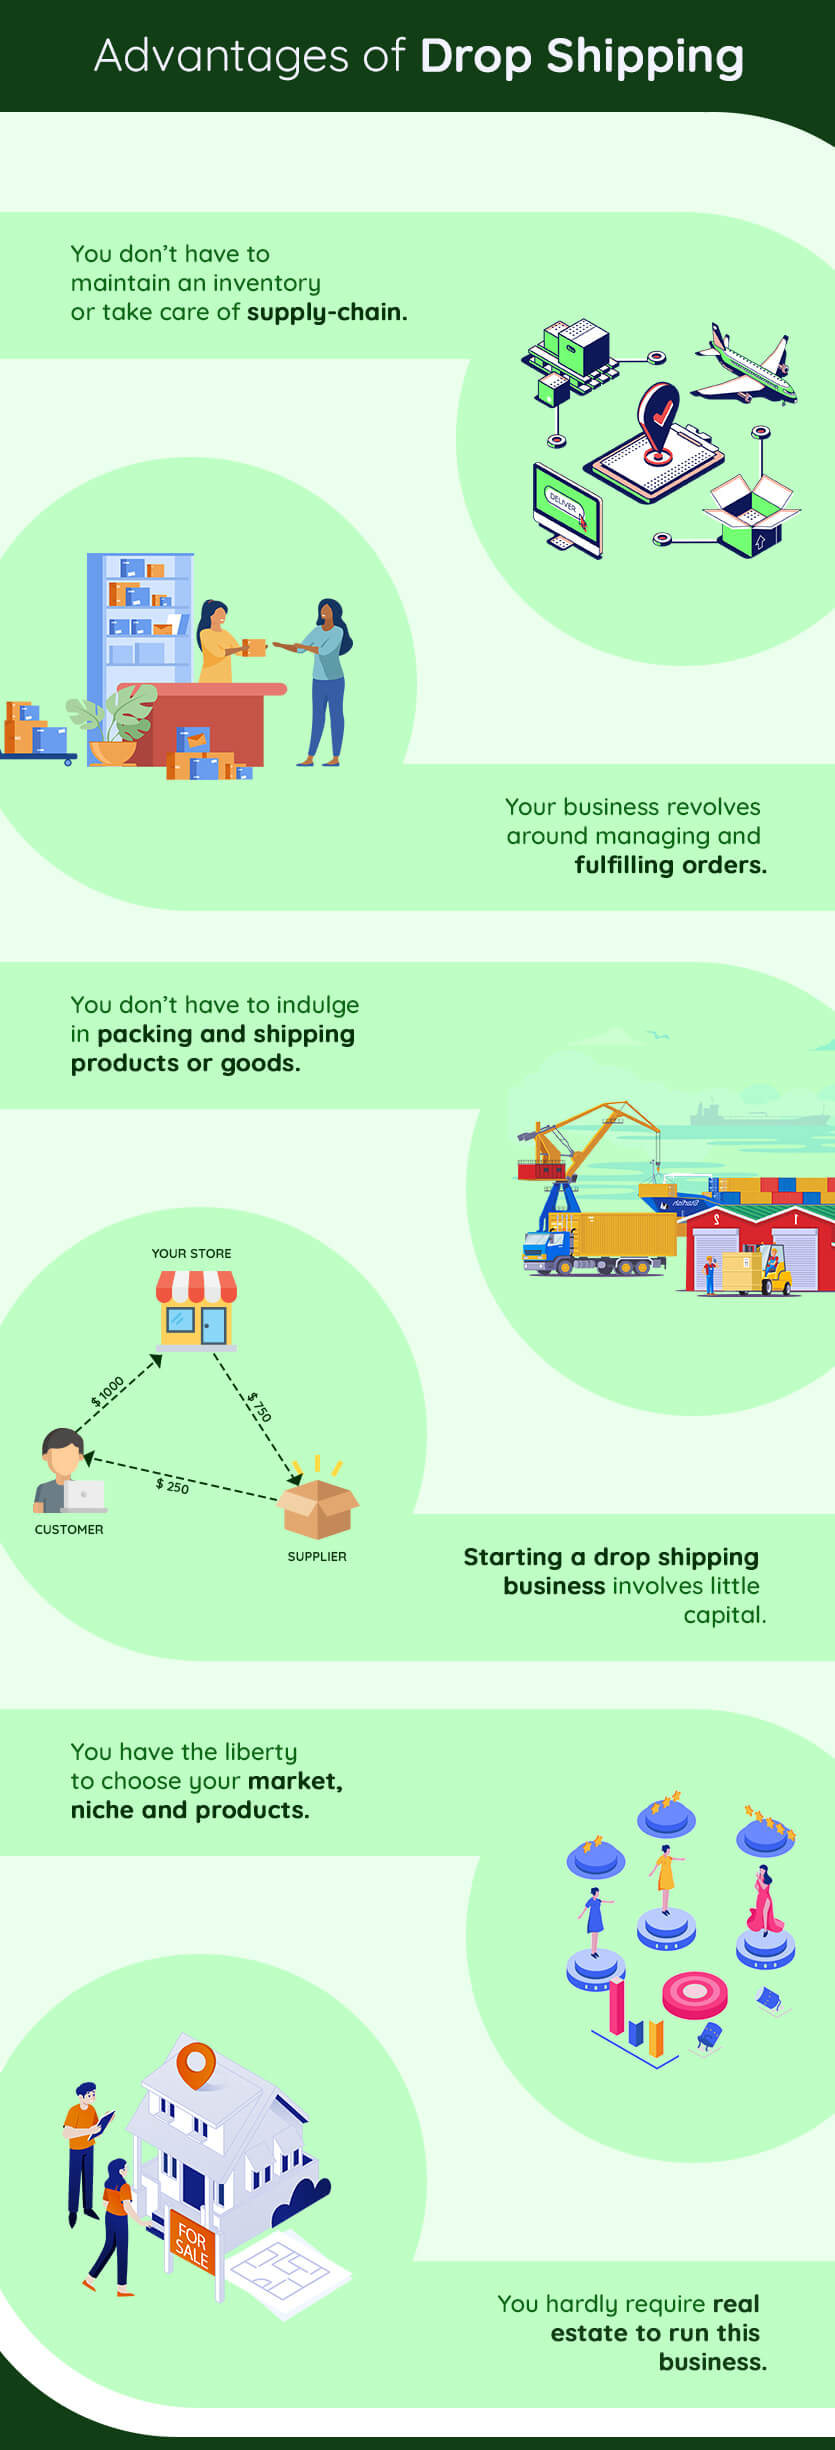 Advantages of Drop Shipping.jpg